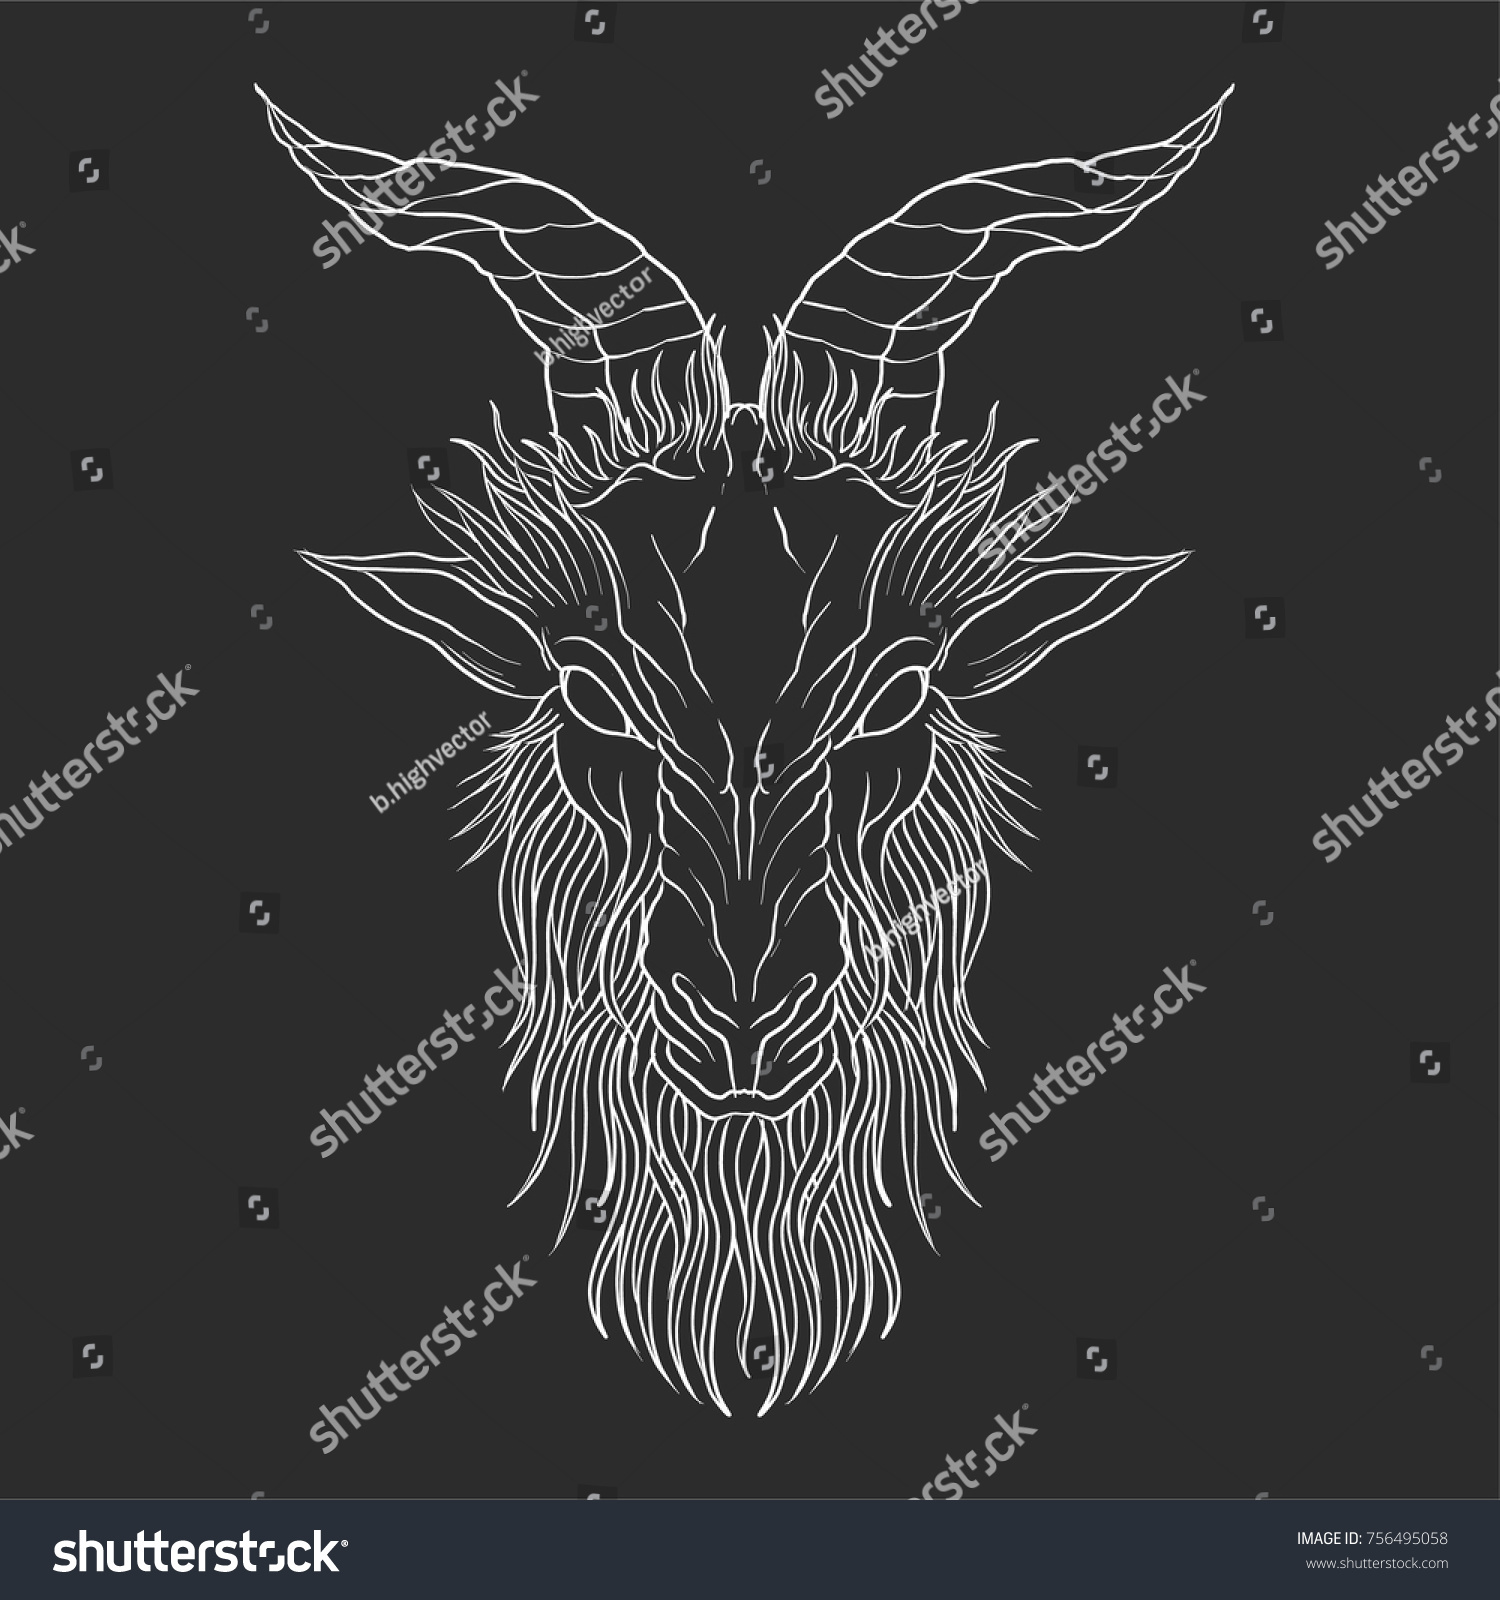 Home Decor Tapestry Wall Hanging Pentagram With Demon Baphomet Satanic Goat Head With Third Eye Binary Satanic Symbol Vector 533043418 for Bedroom Living Room Dorm